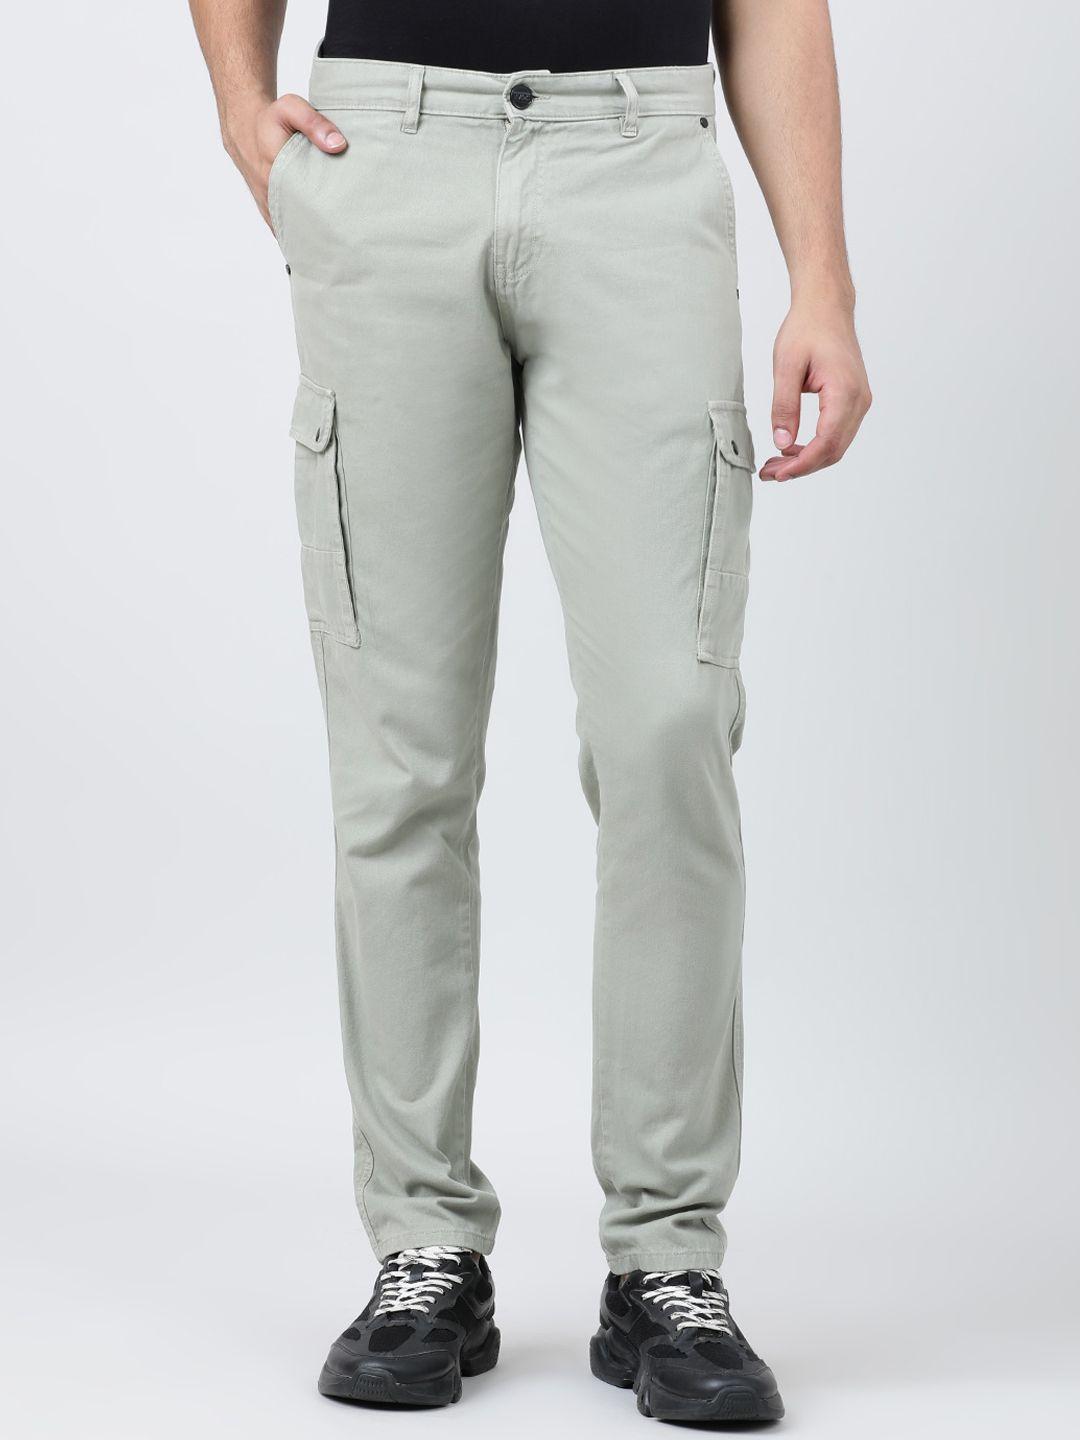 ivoc-men-slim-fit-pure-cotton-cargos-trousers